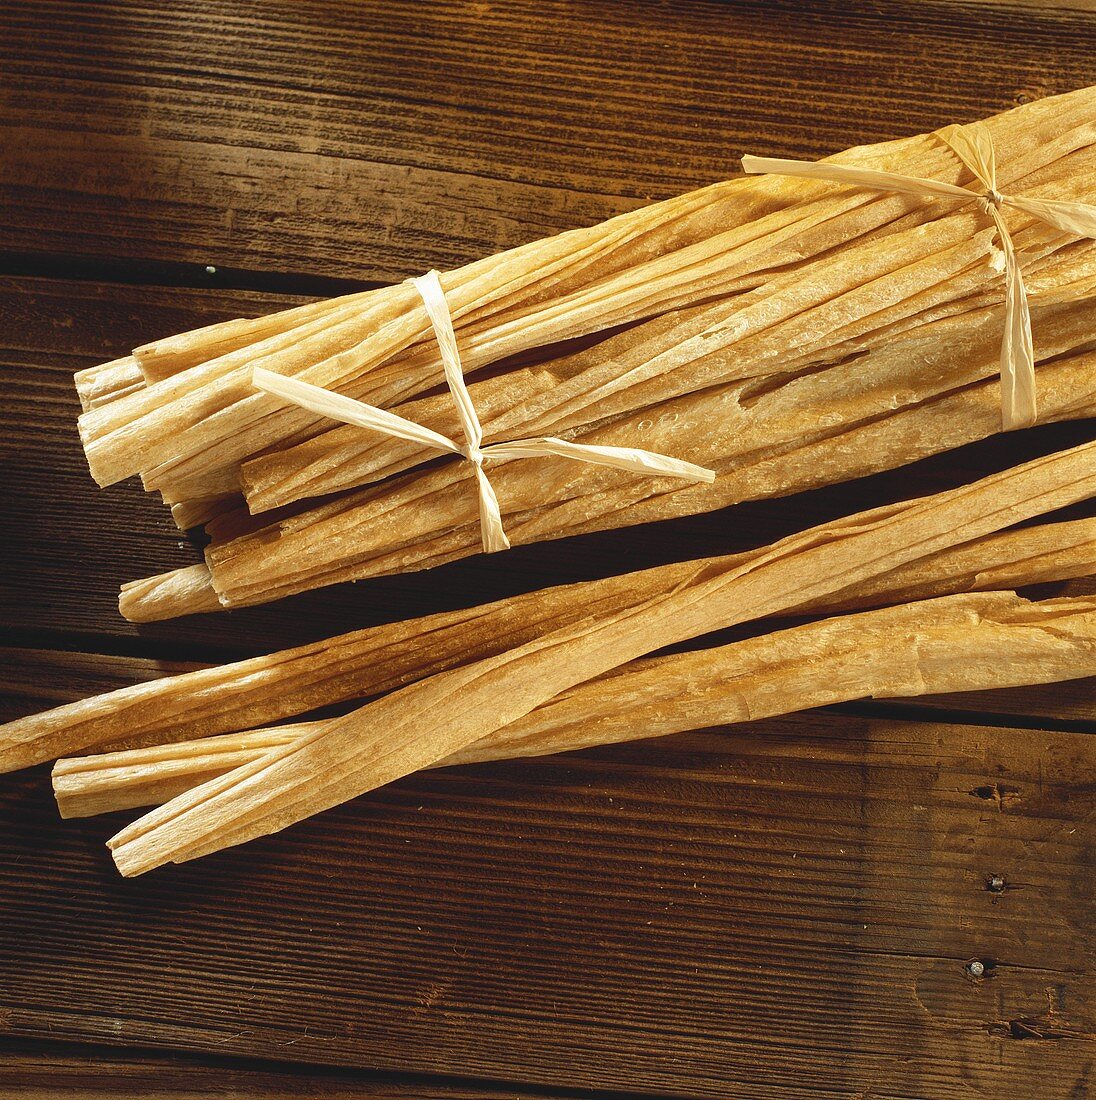 Rolled Fu Zhu sticks (dried soya milk skin)